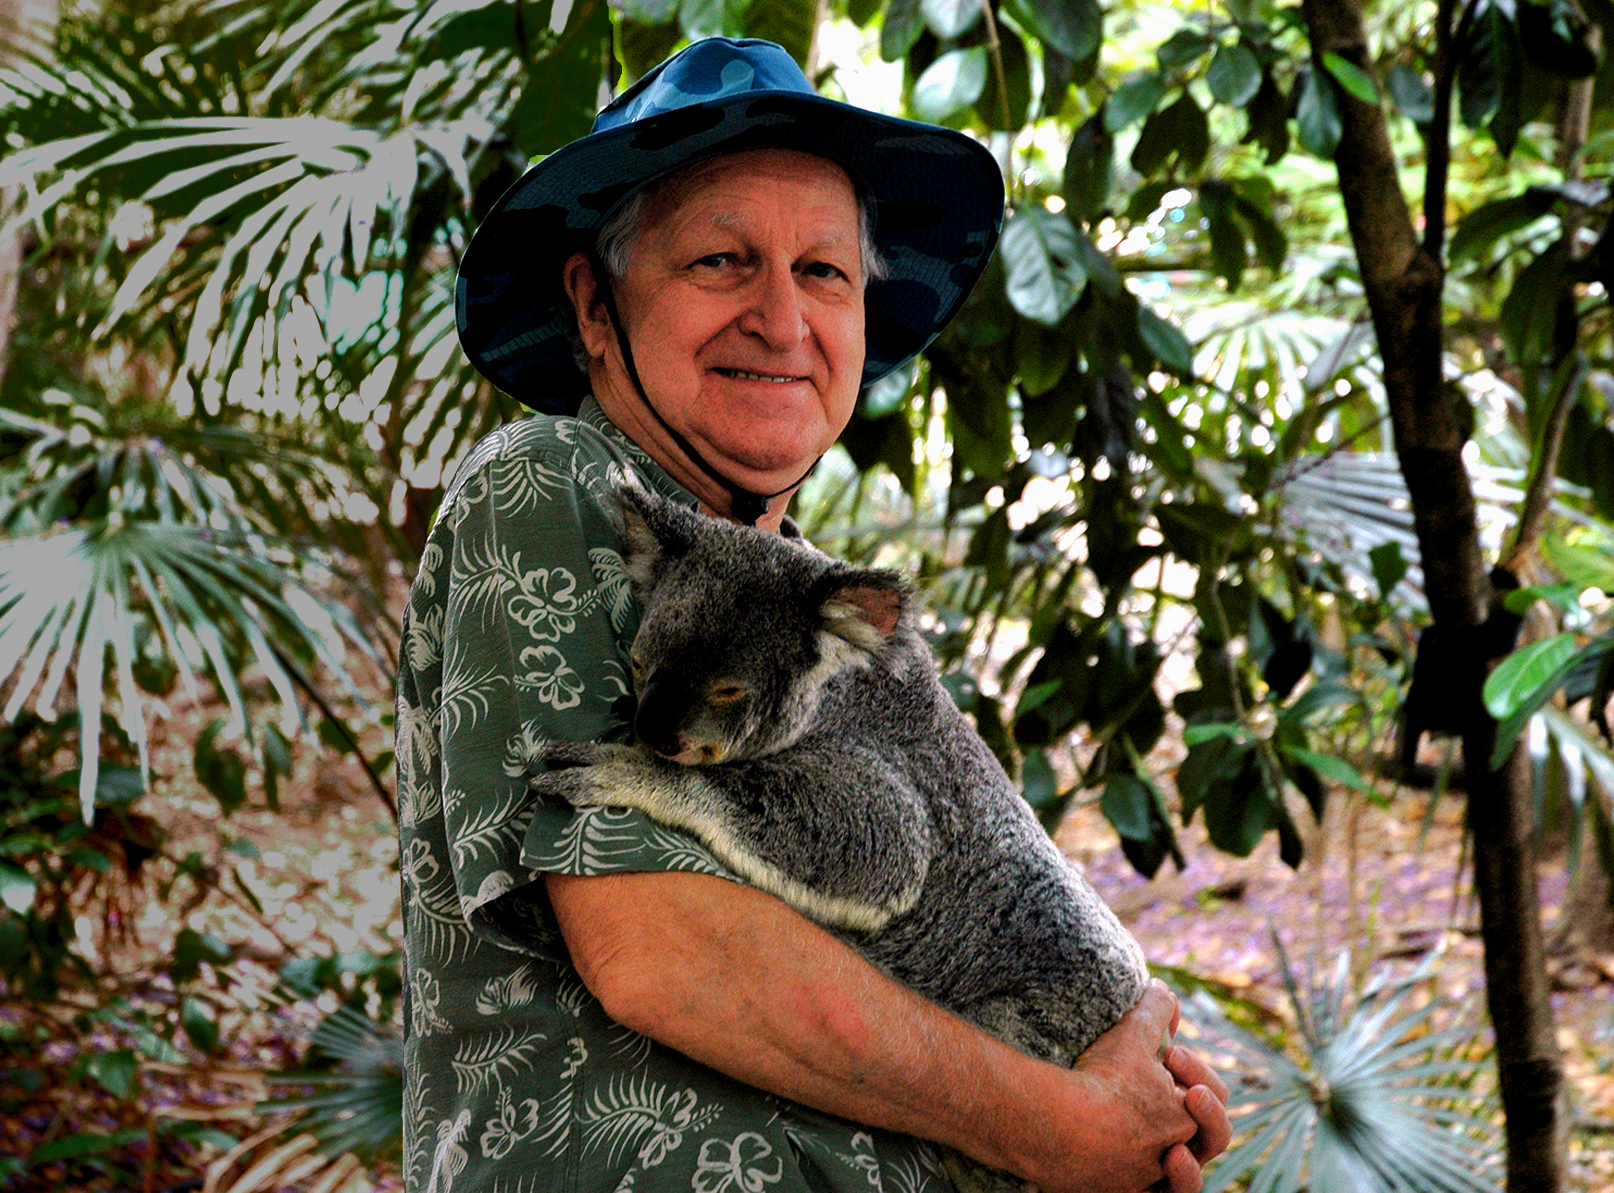 SITE MODERATOR HOLDING A KOALA - THE SYMBOL OF AUSTRALIA